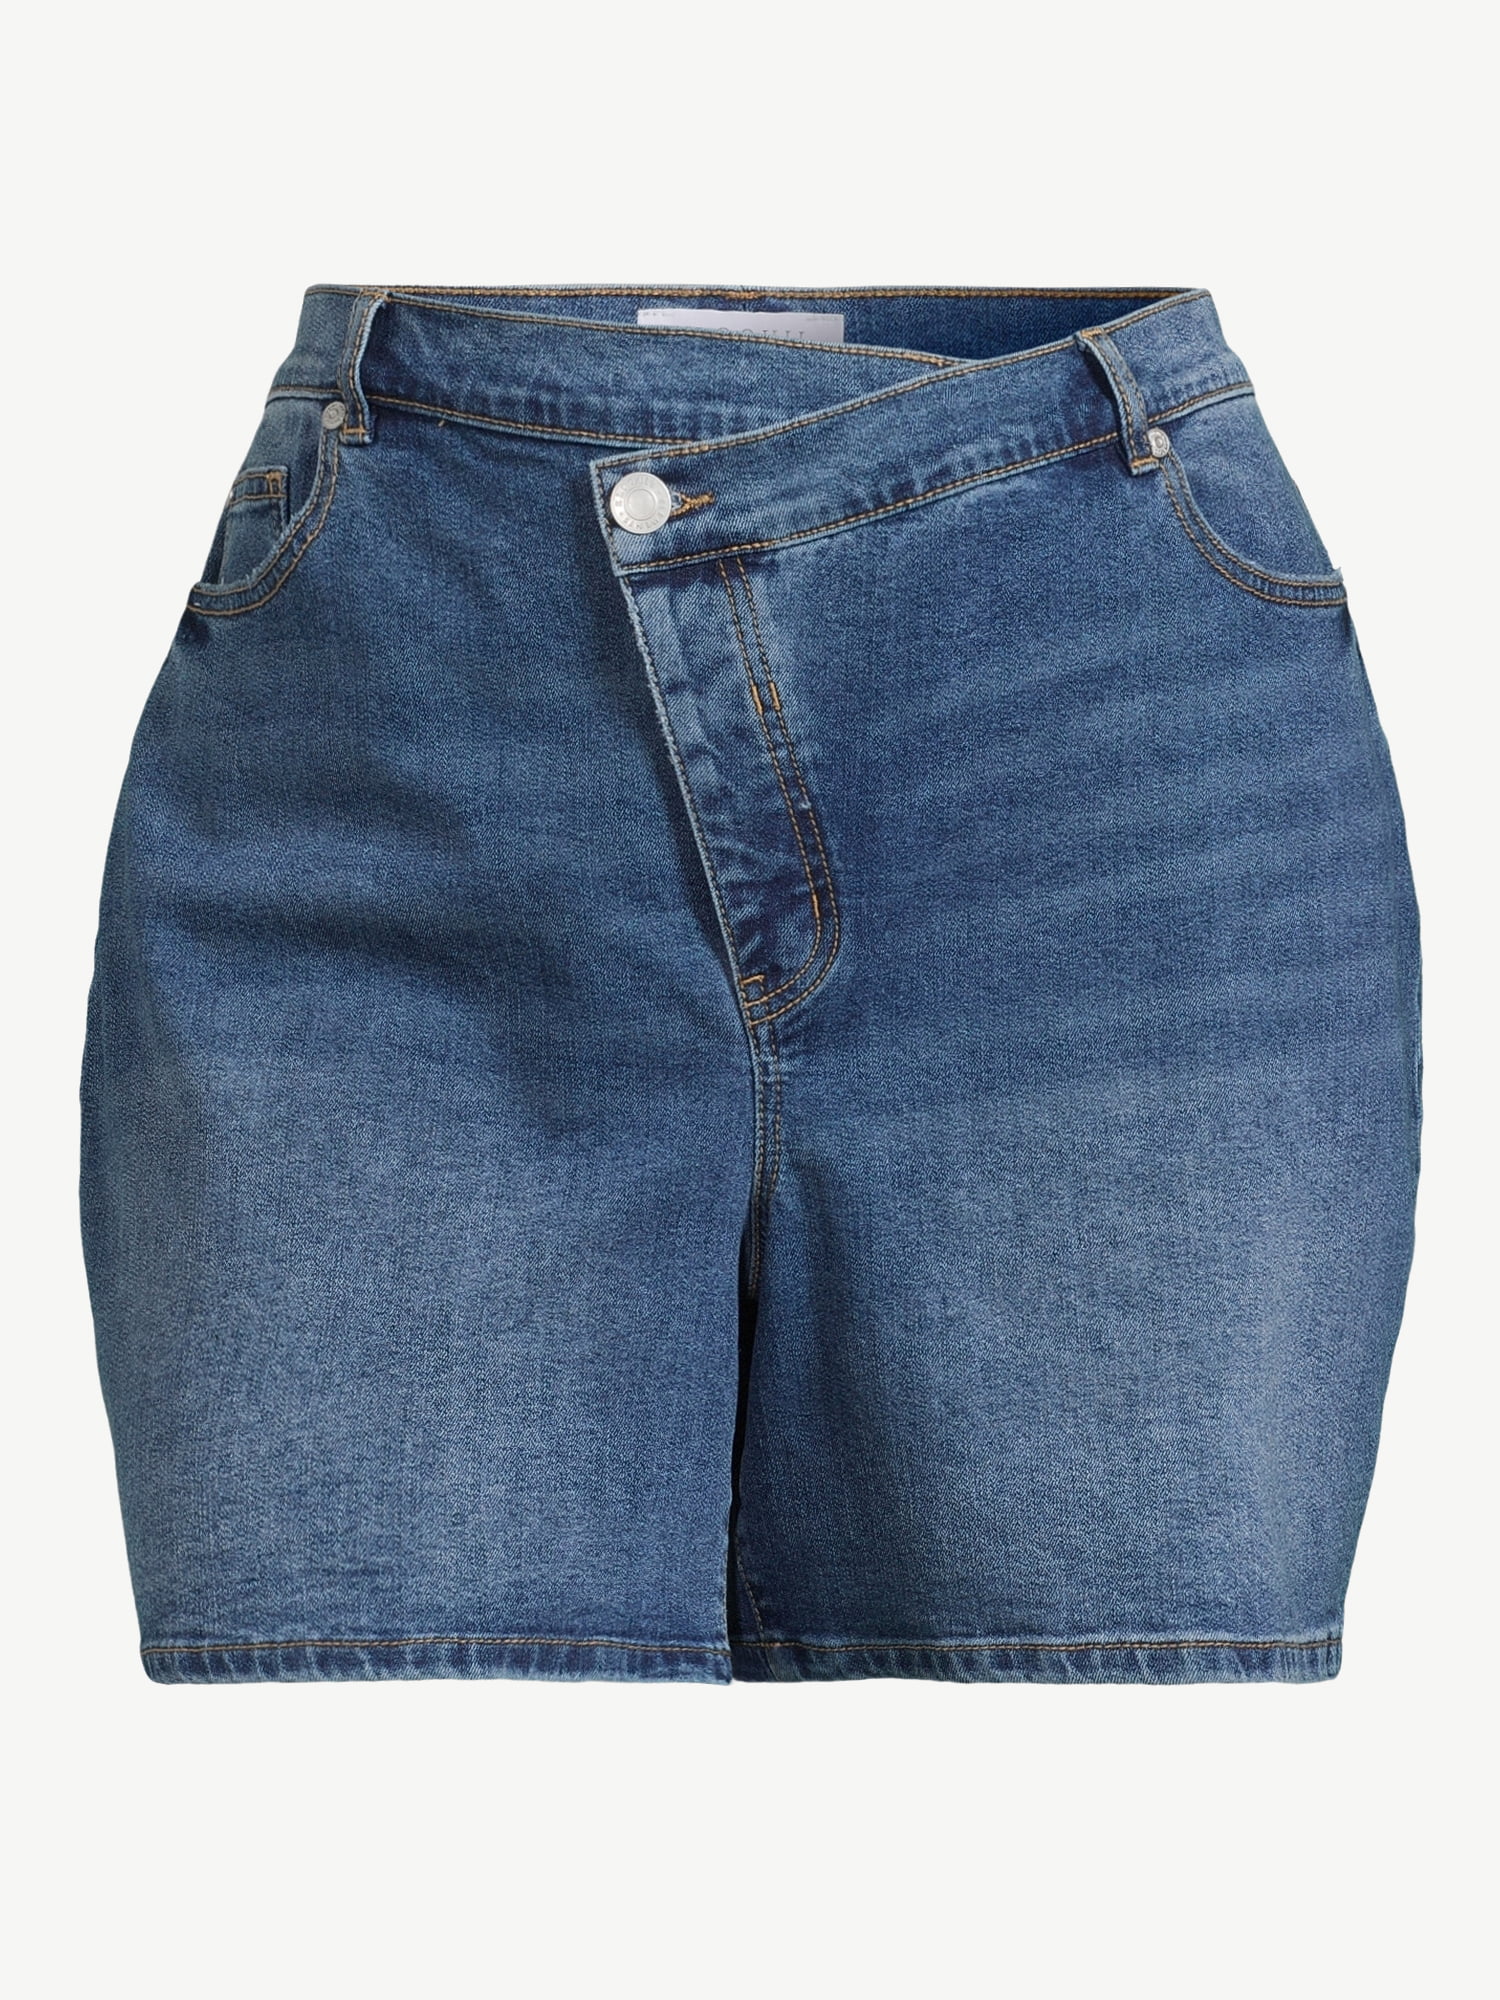 Voghtic Women's Denim Shorts Stretchy Casual High Waisted Denim Skort Skirt  Shorts Plus Size Asymmetrical Jean Skorts